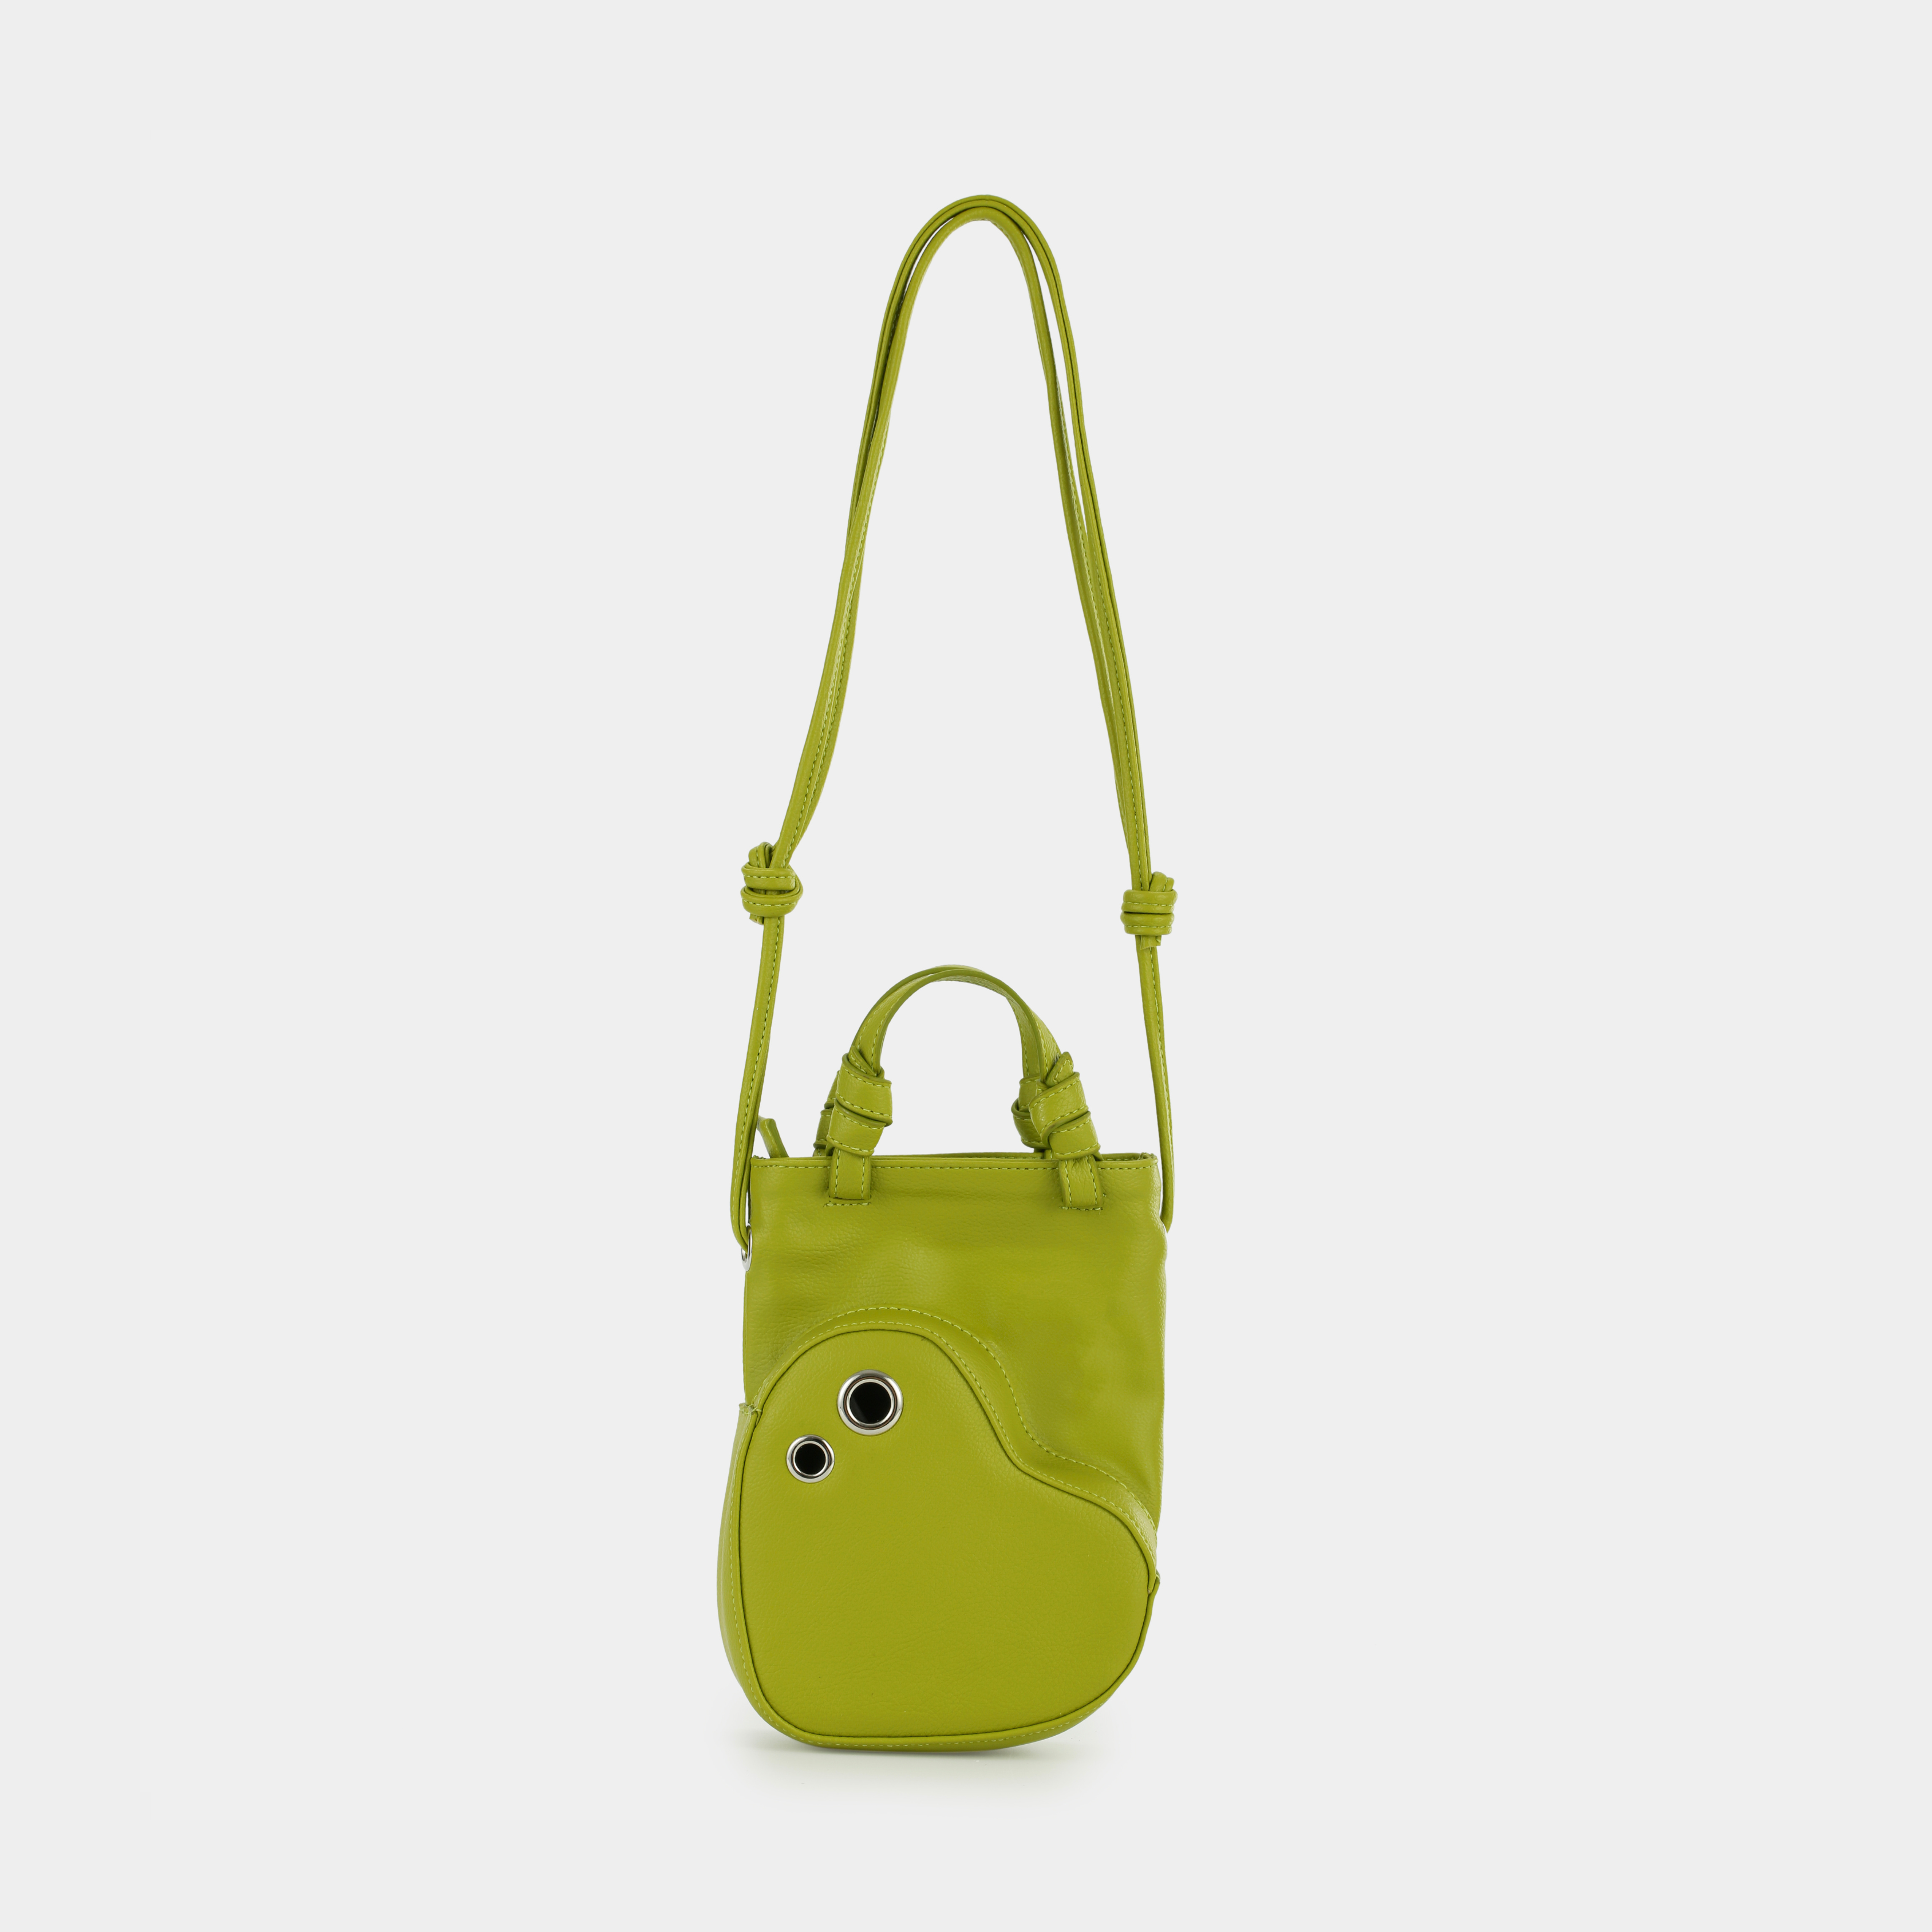 Growing Heart handbag in avocado green